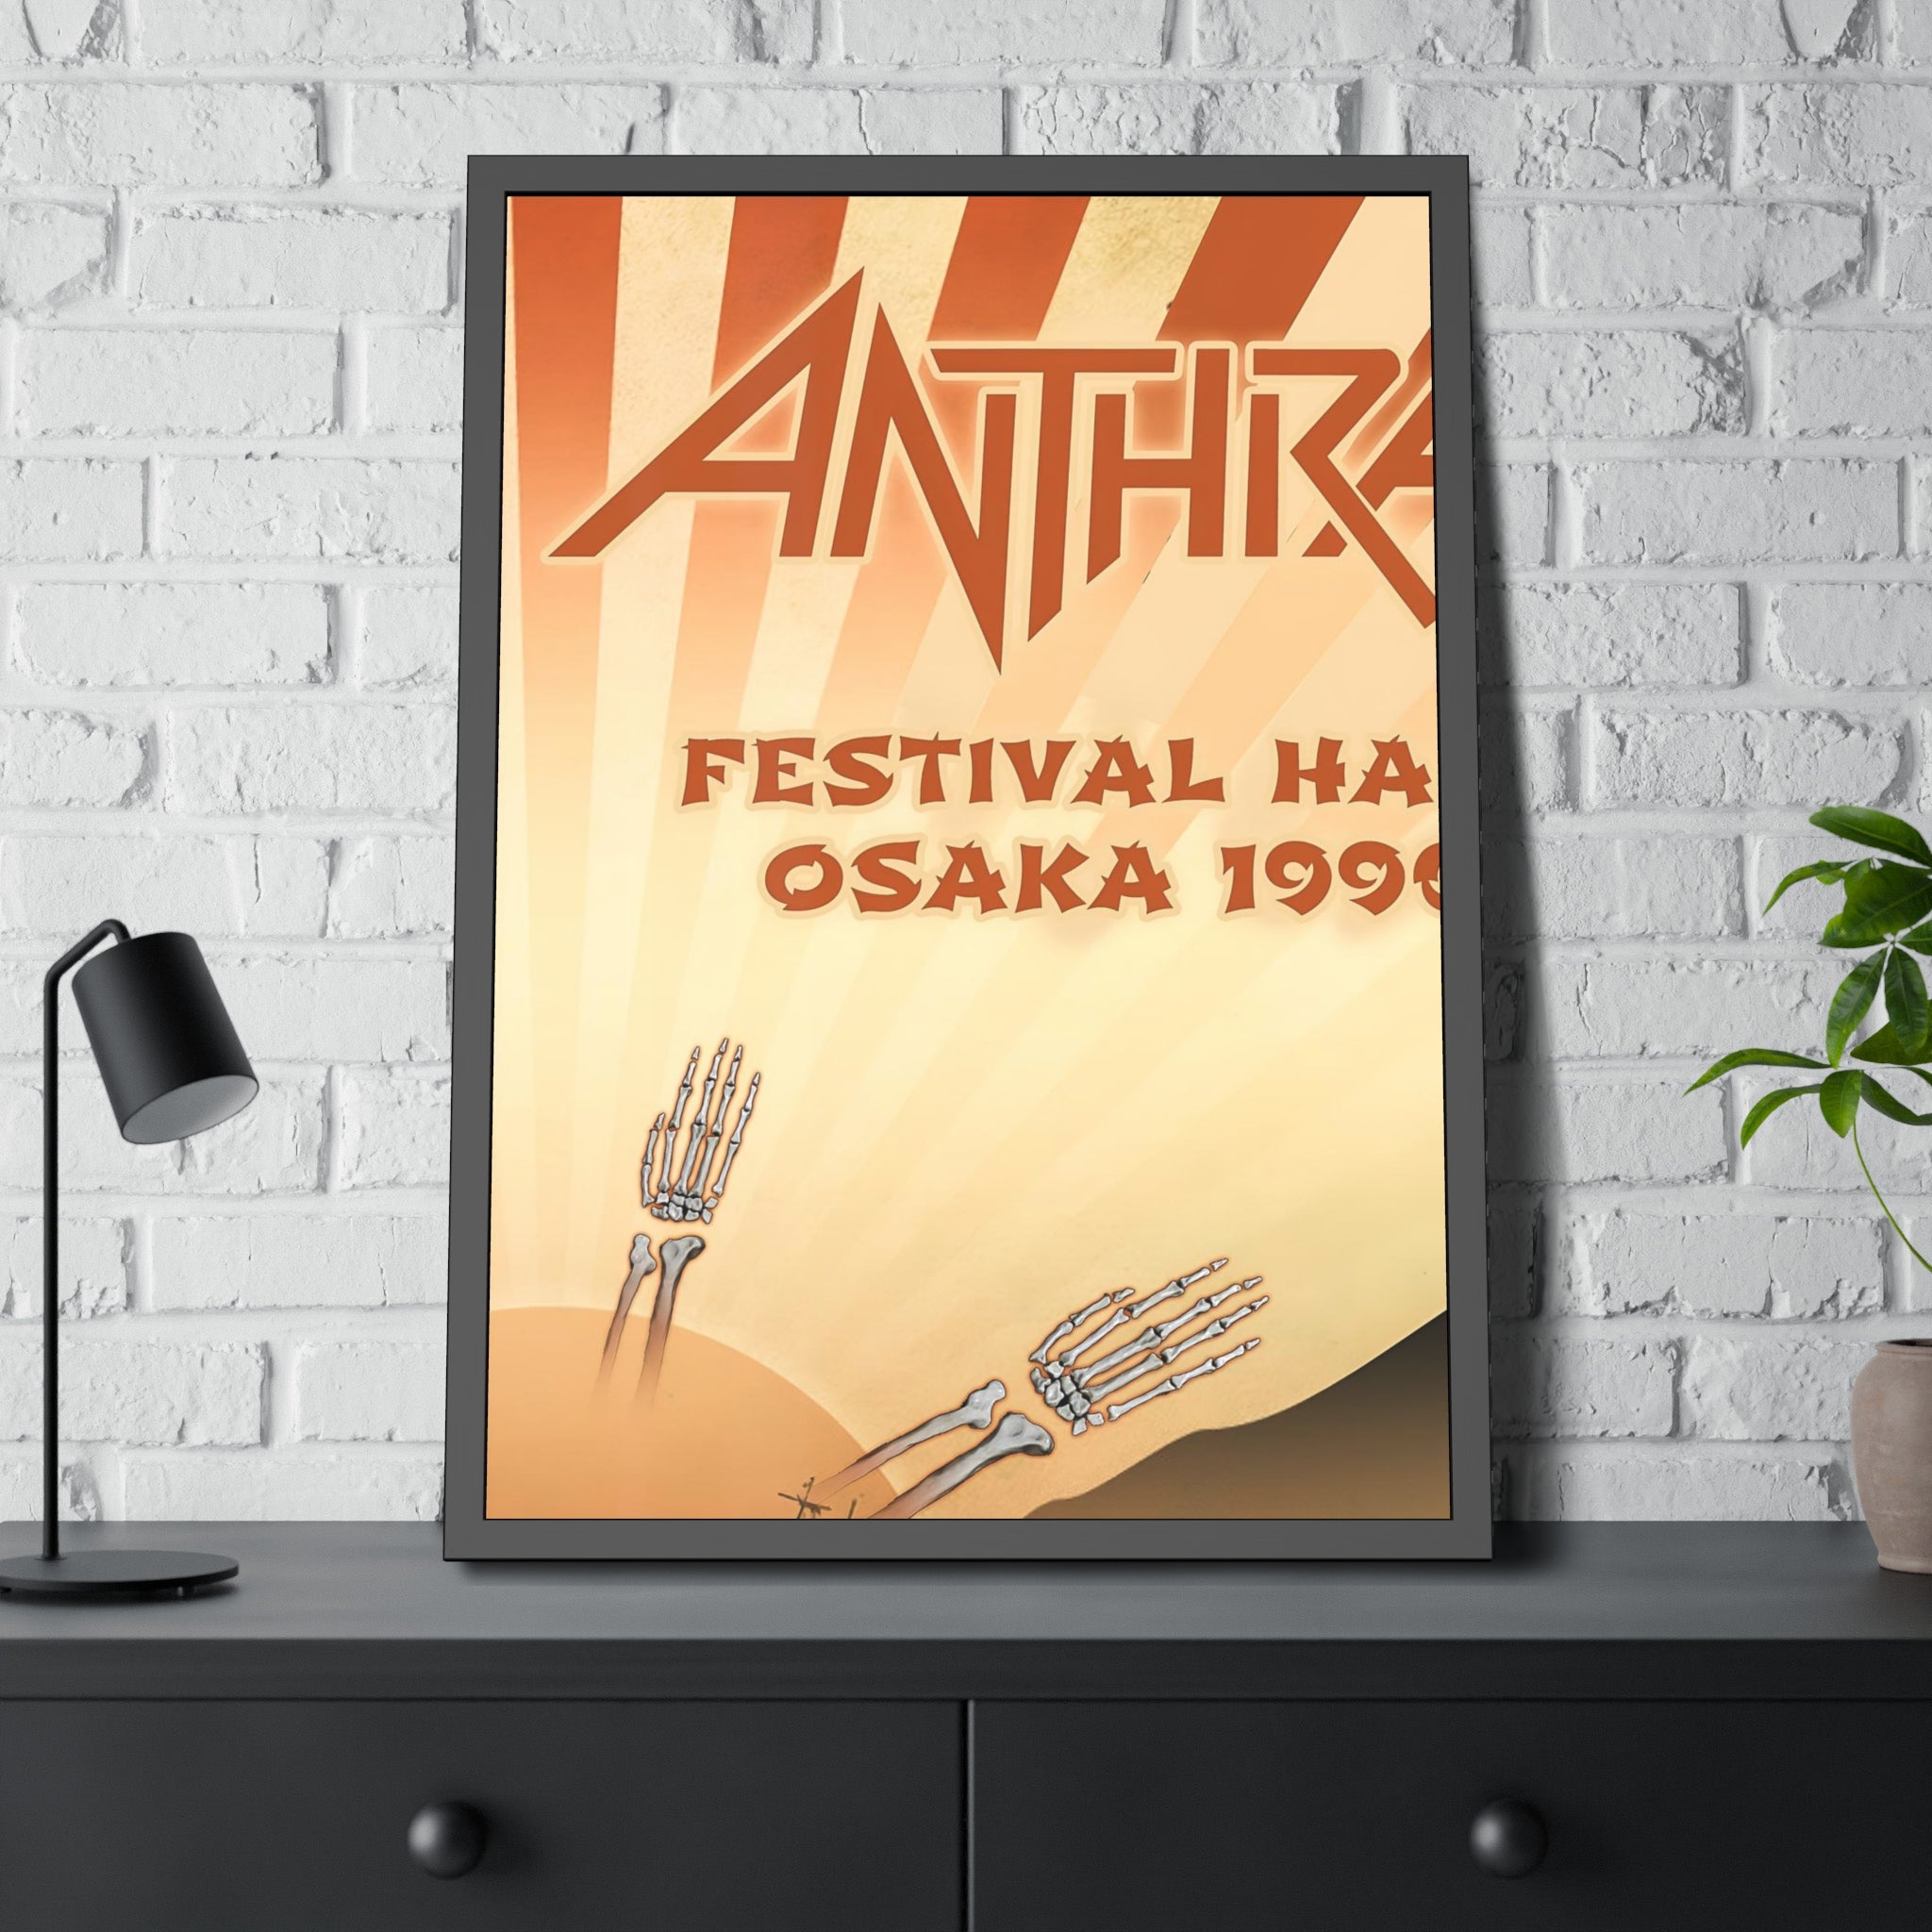 Anthrax Osaka 1990 Concert Poster